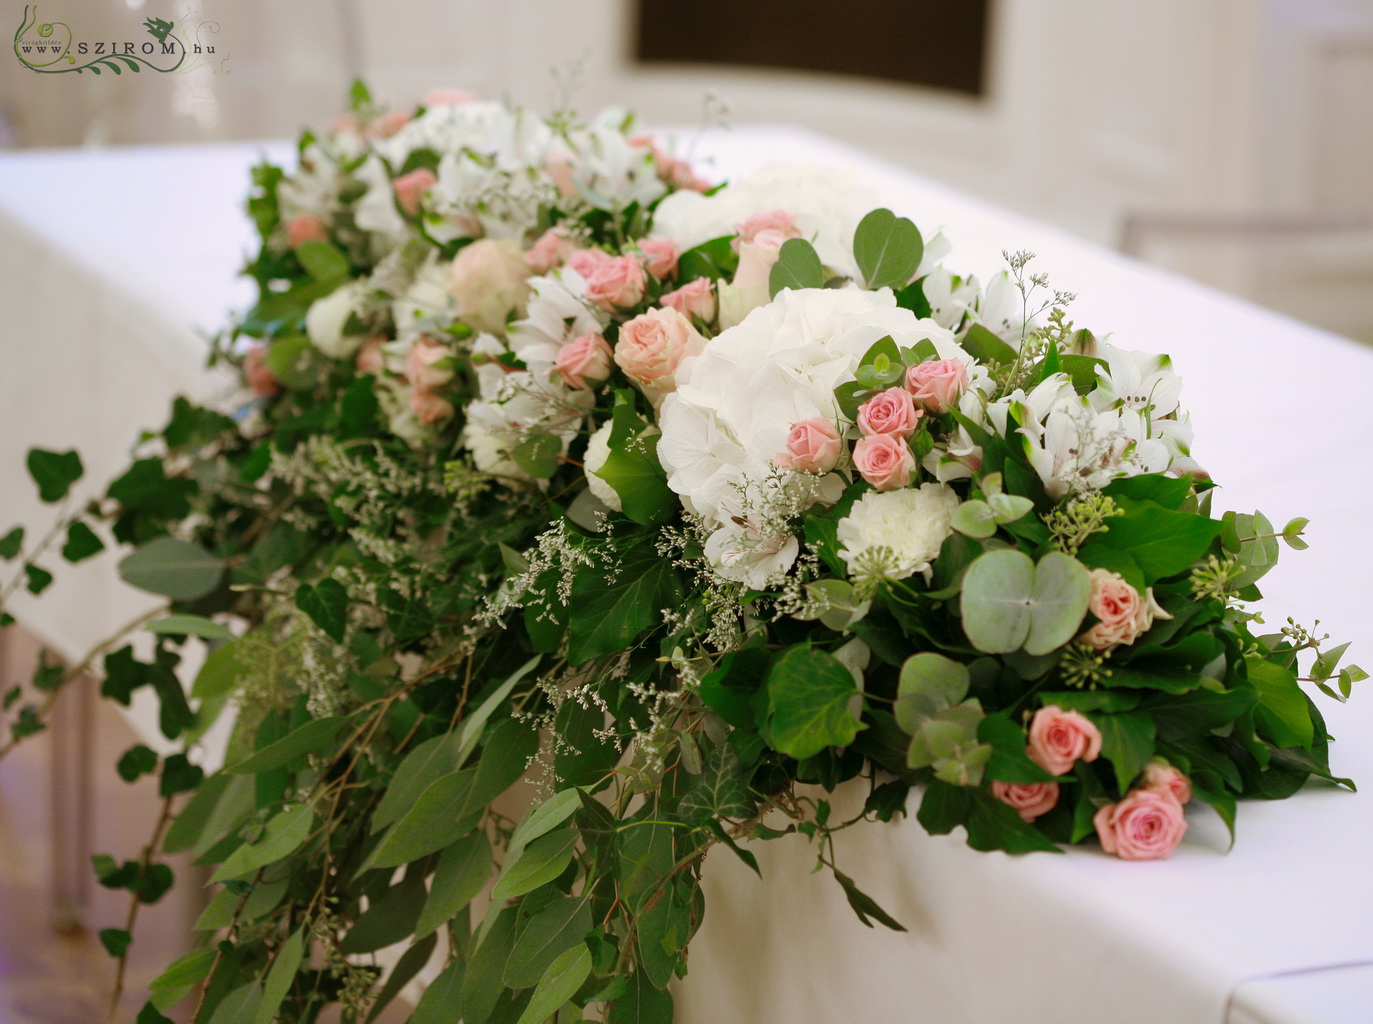 flower delivery Budapest - Main table centerpiece Festetics Palota (hydrangea, bushy rose, alstromelia, white, pink), wedding